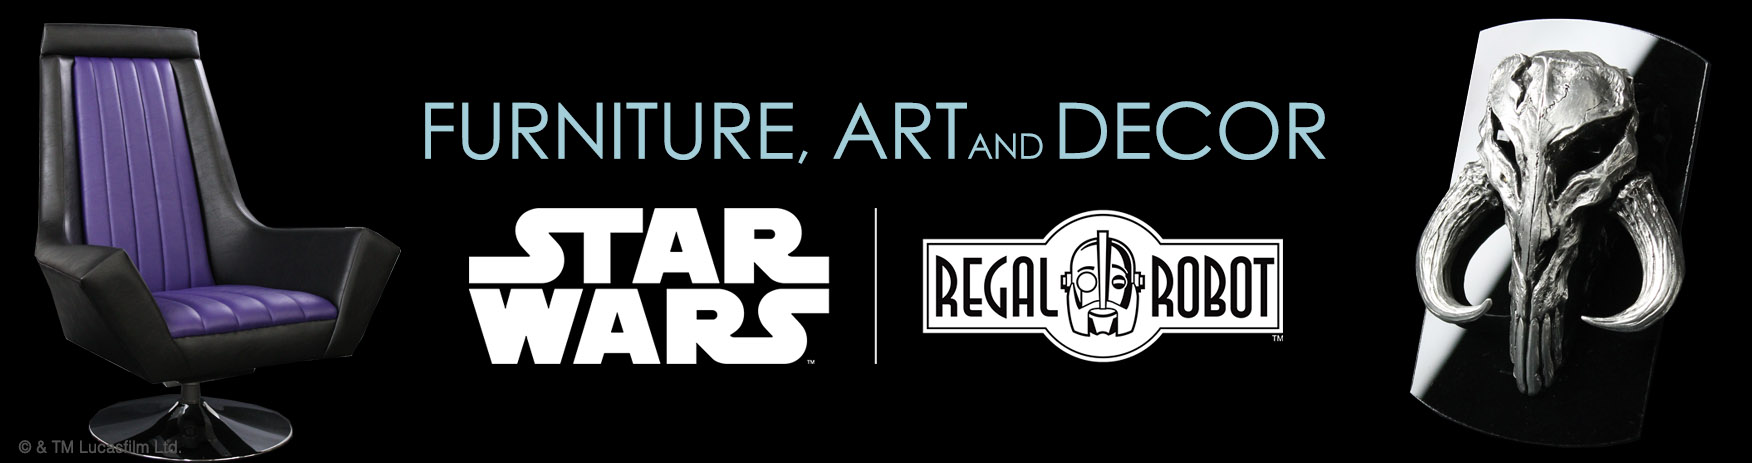 Star Wars furniture by Regal Robot